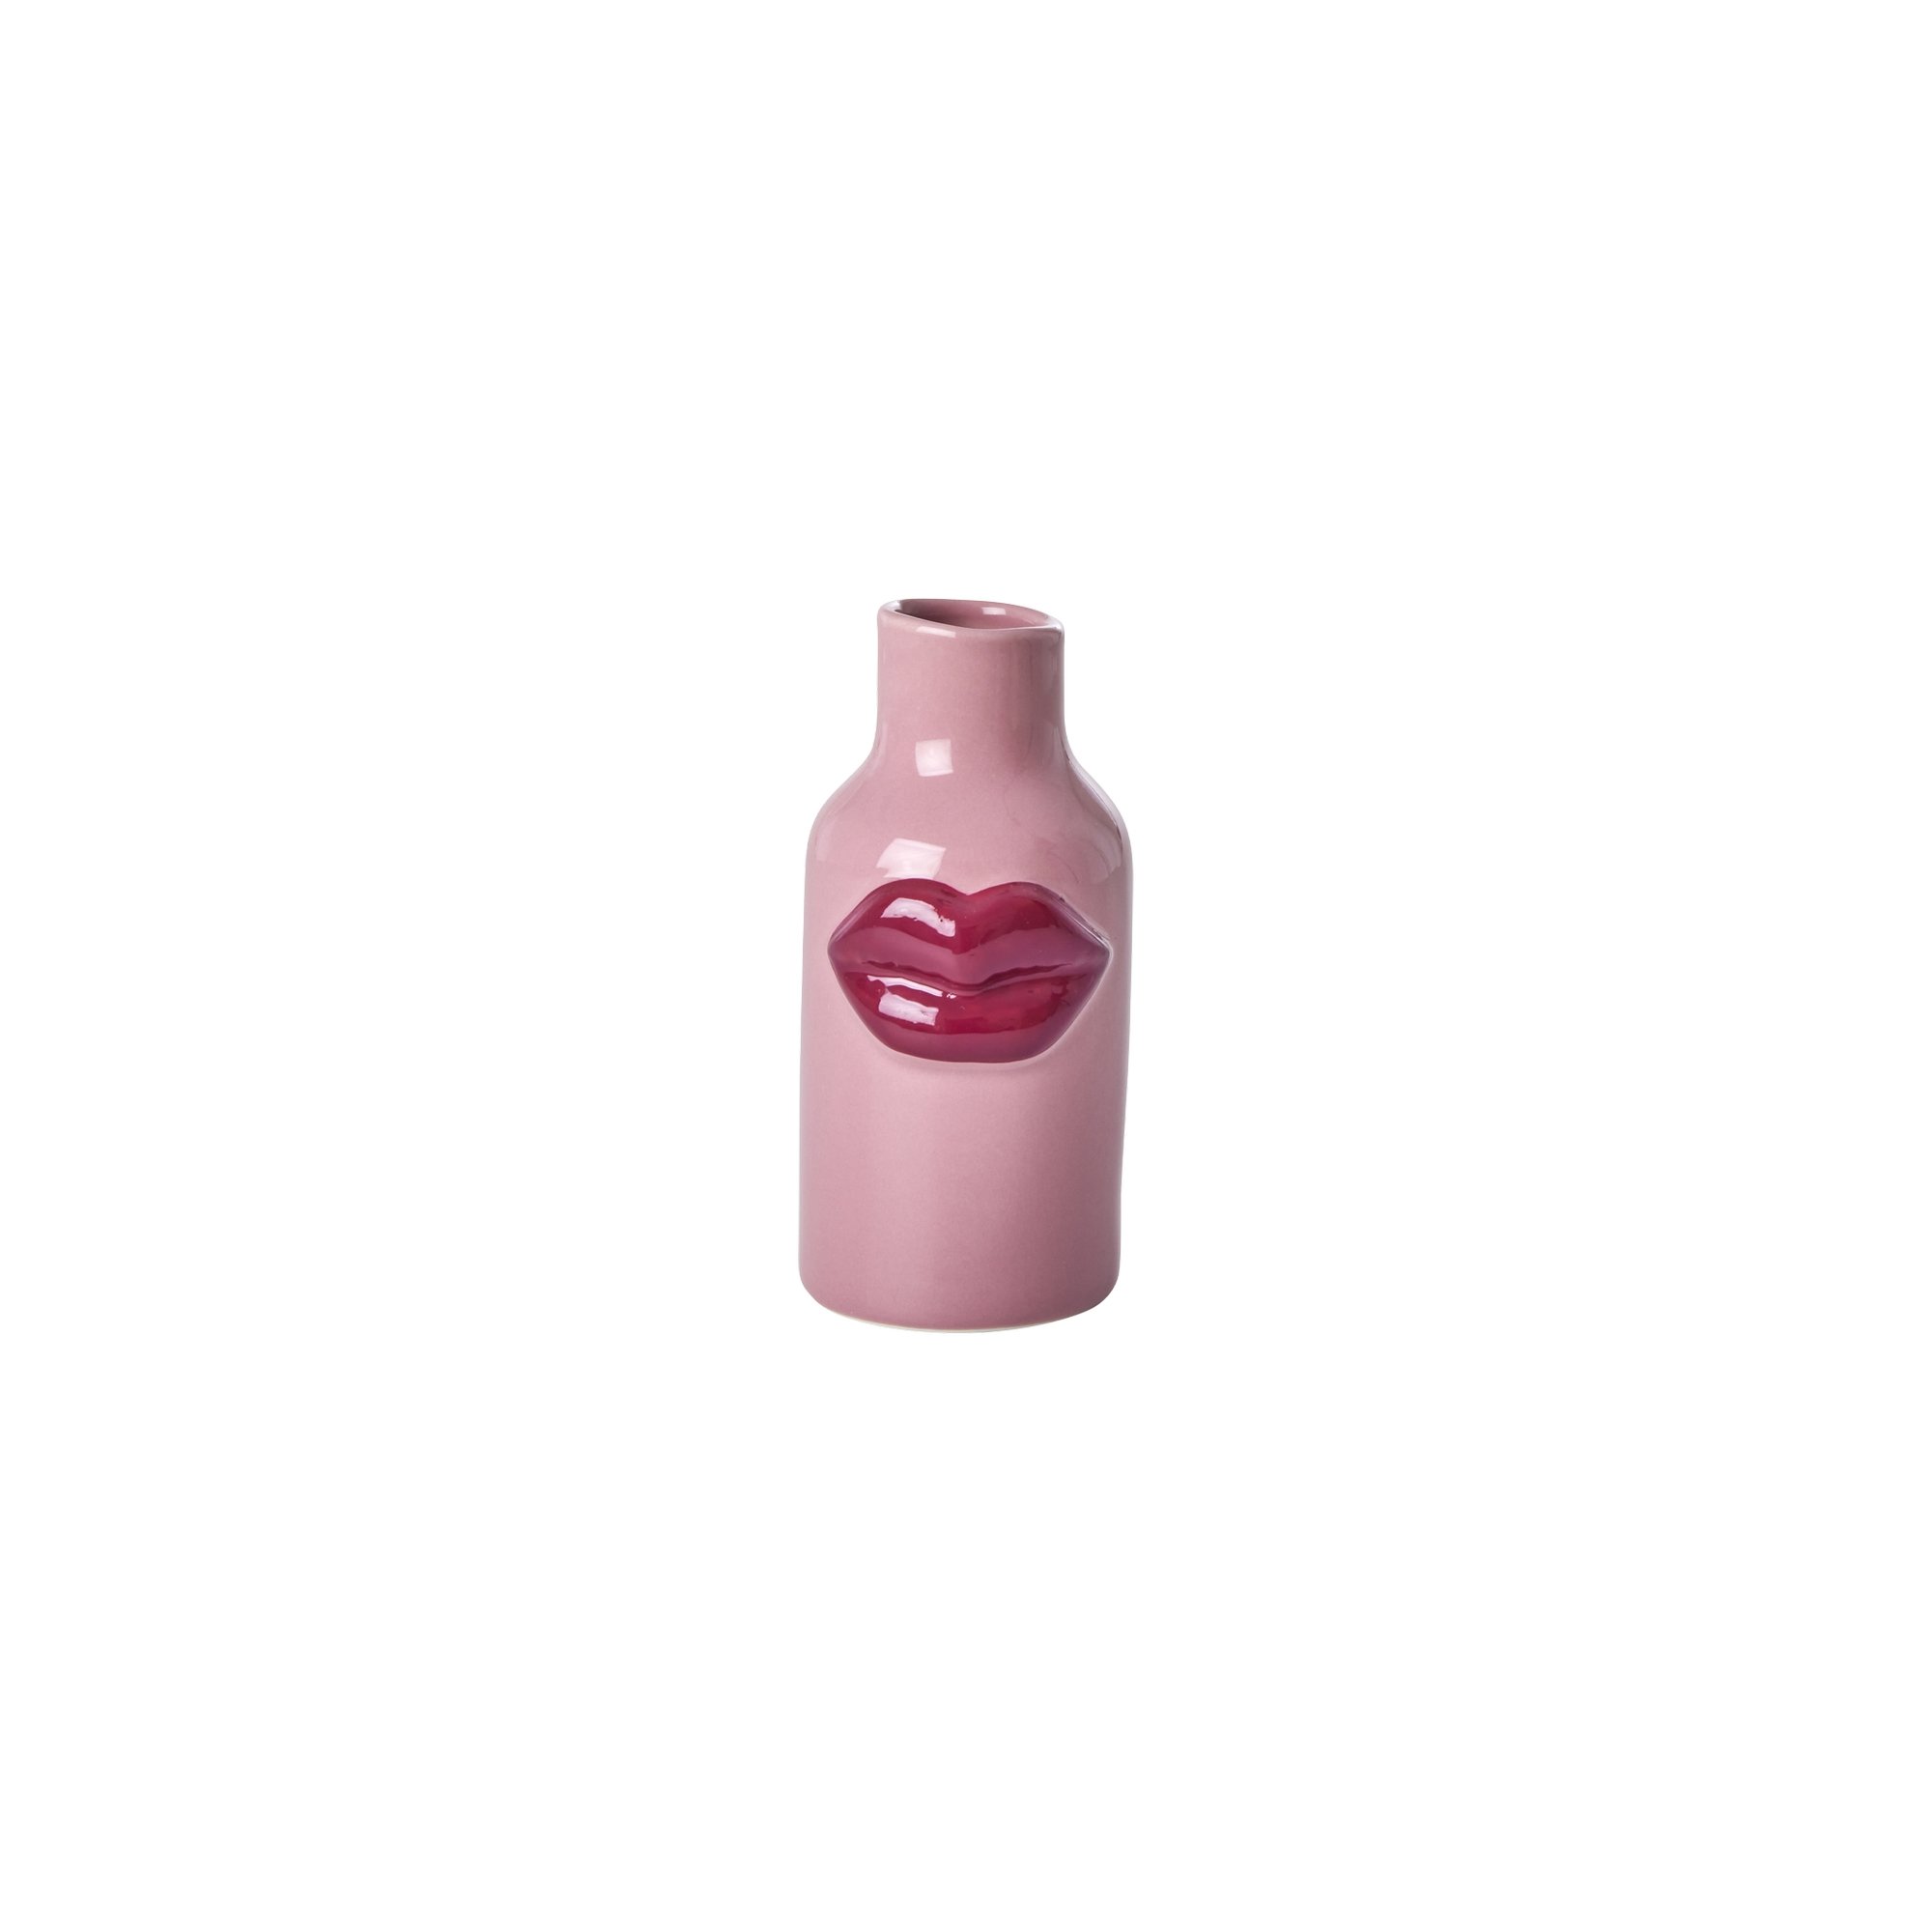 #2 - Rice - Ceramic Vase with Lips Ekstra Small Pink